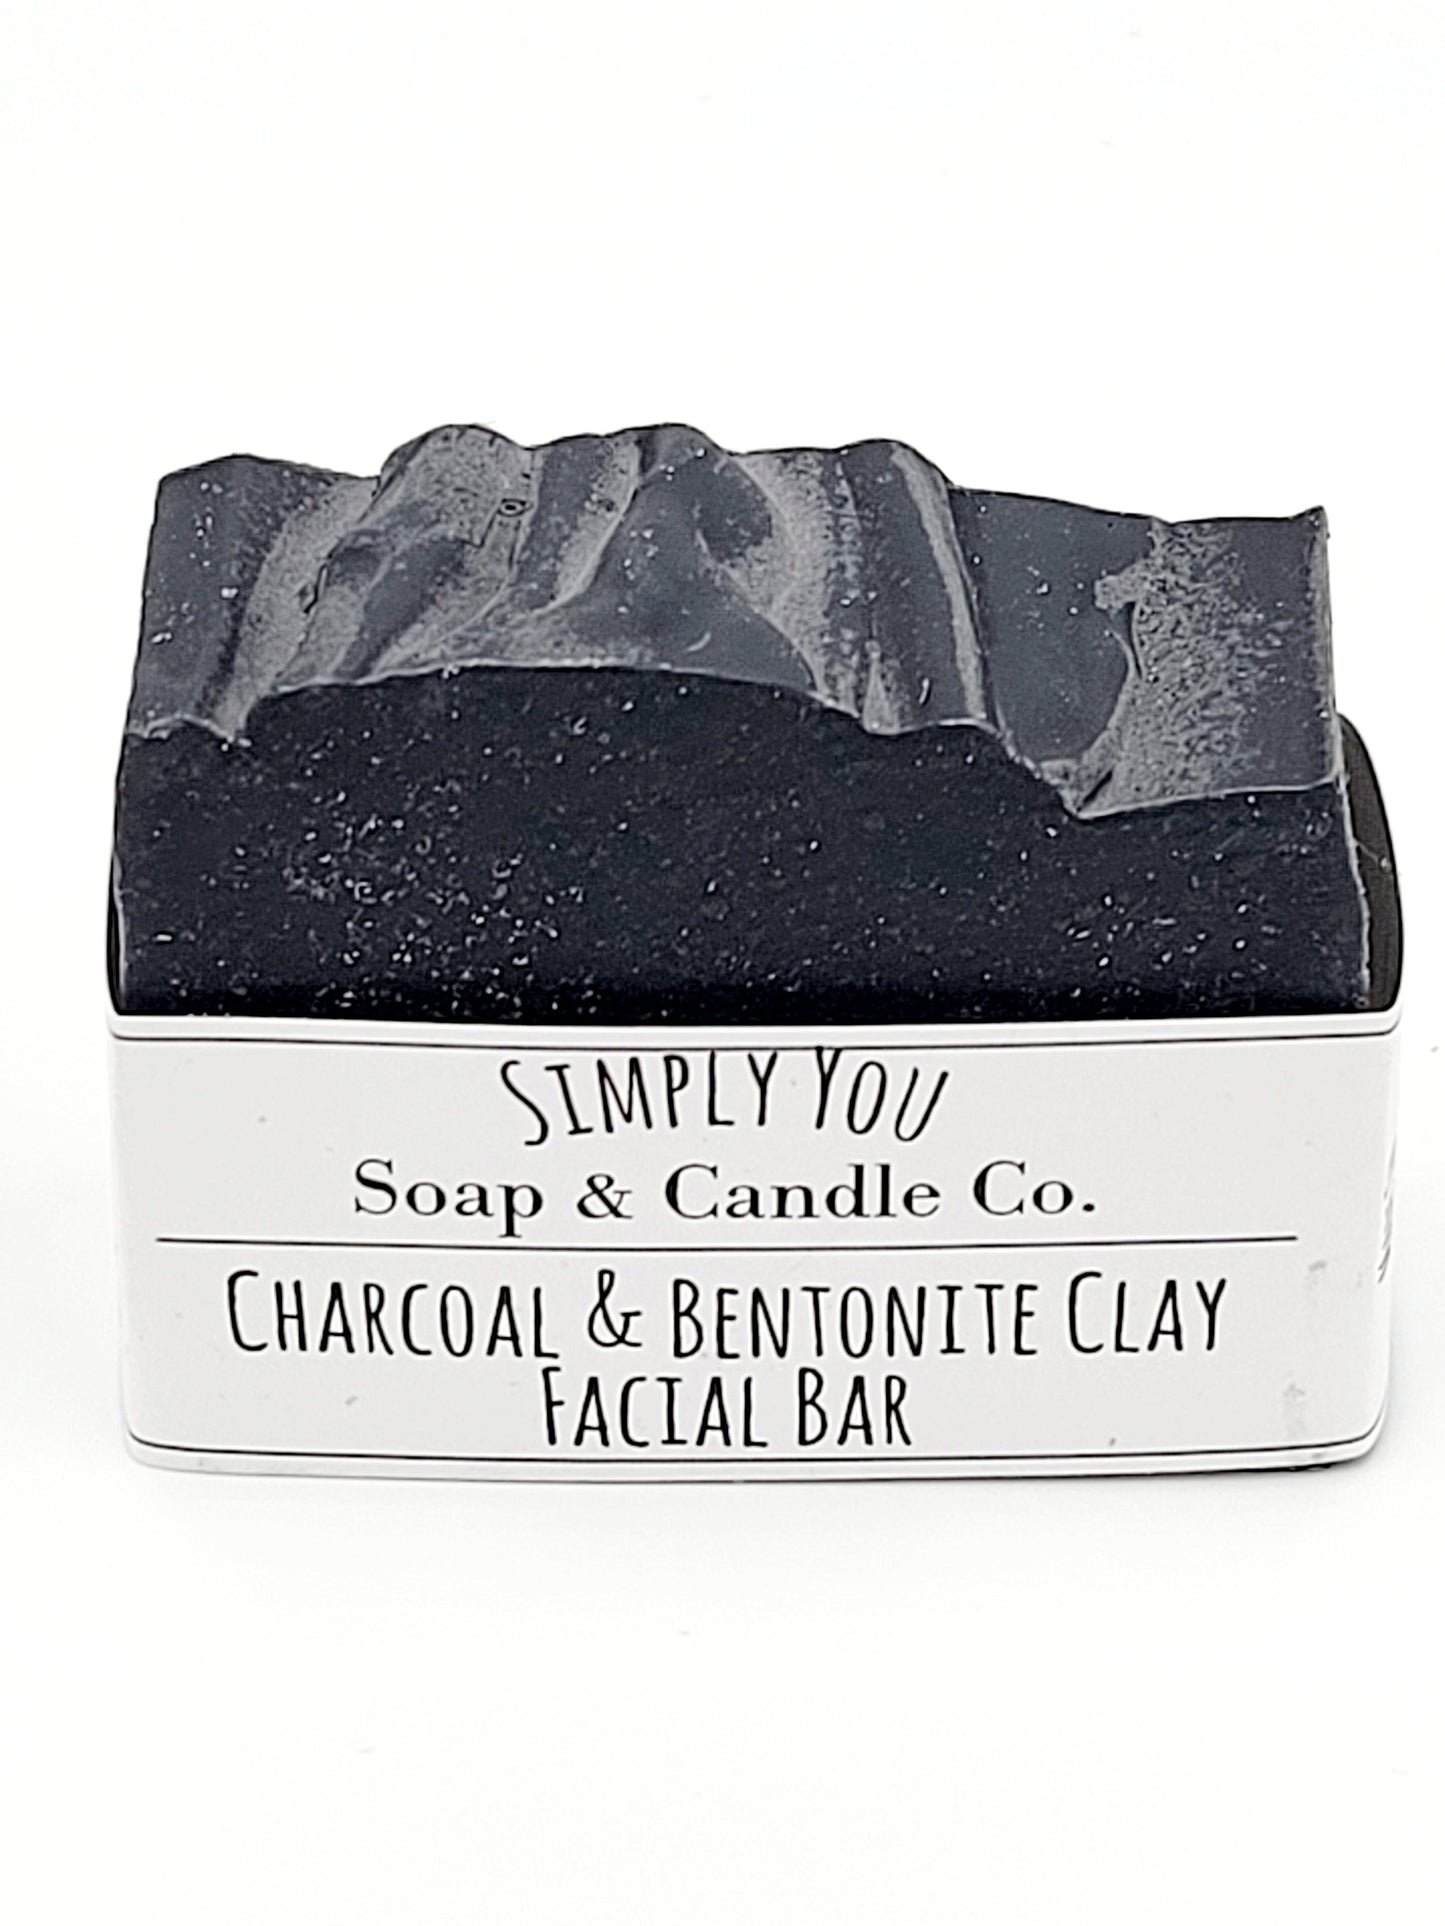 Charcoal & Bentonite Clay Facial Soap